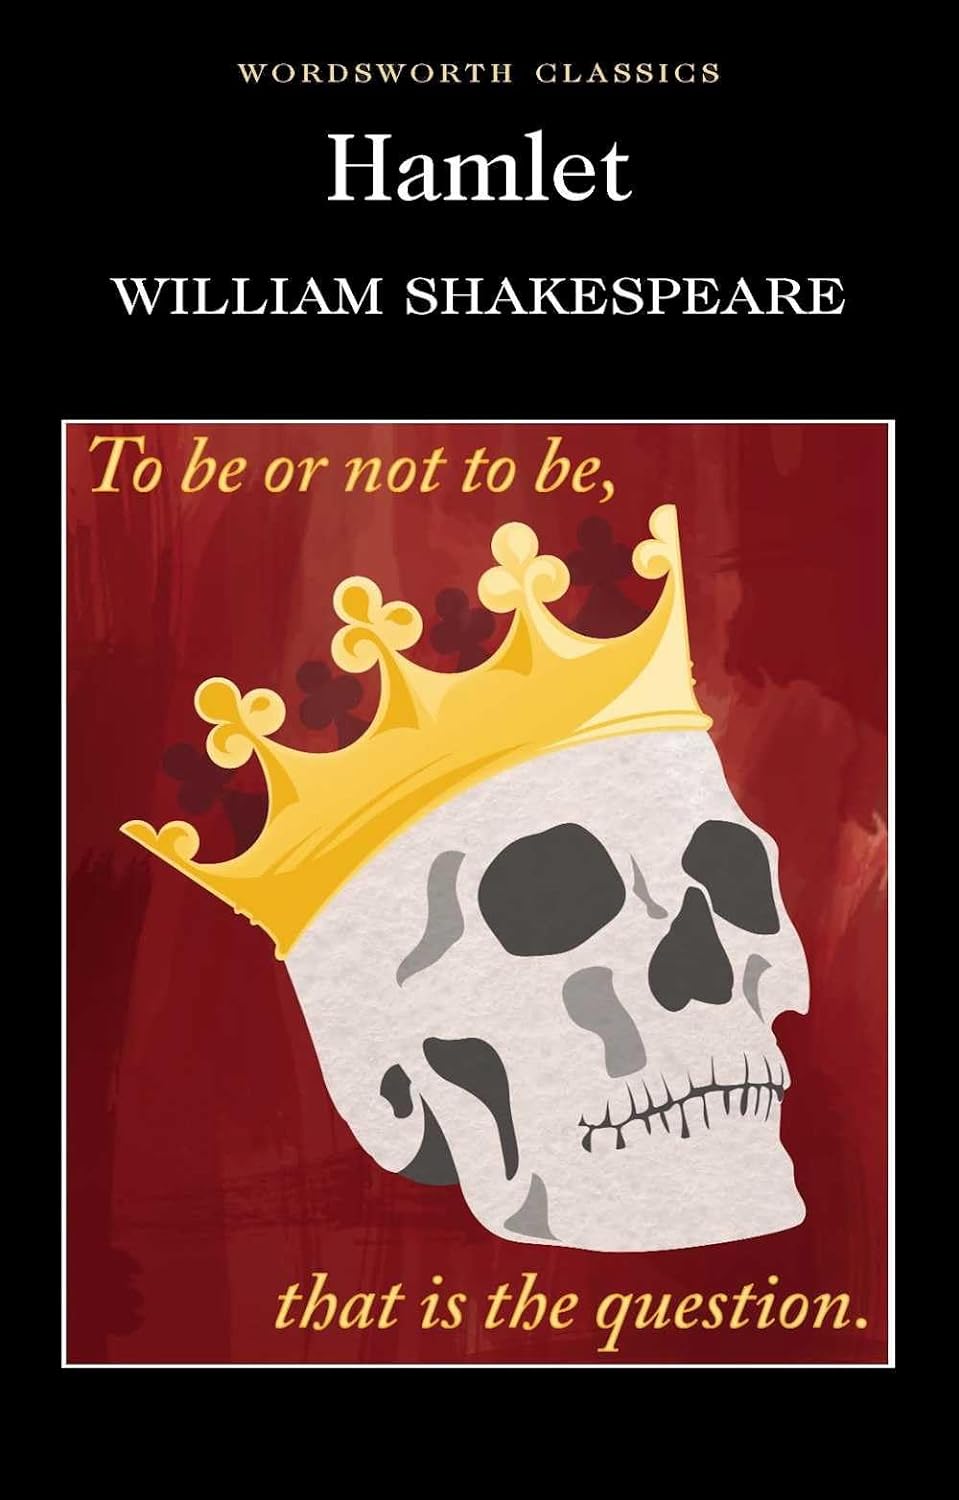 Sách Ngoại Văn - Hamlet (Wordsworth Classics) - William Shakespeare (Author)